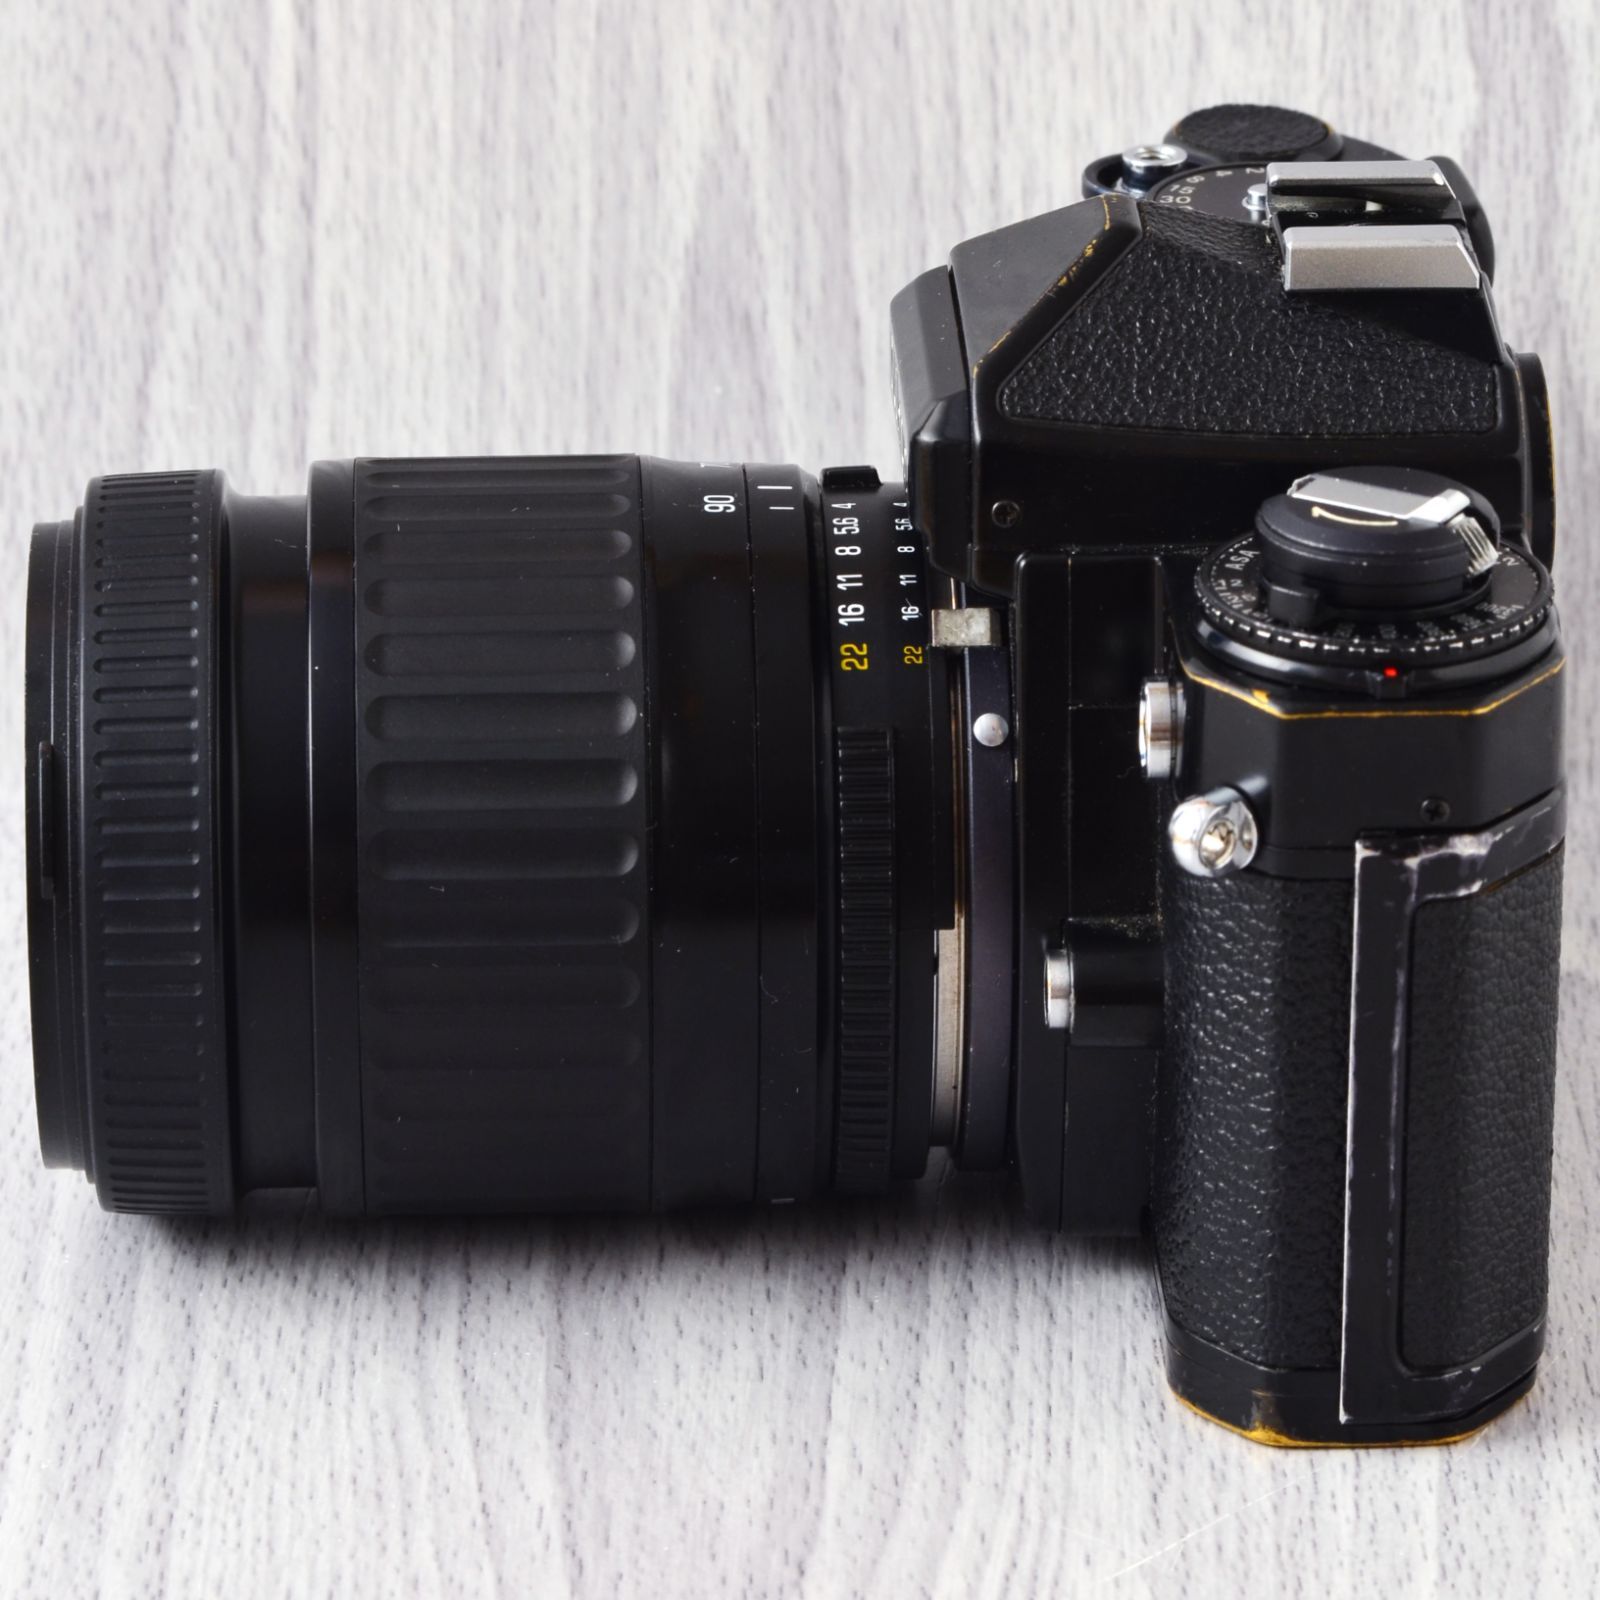 Nikon FE 黒 + 35～90mmズーム MFフィルムカメラ 整備済